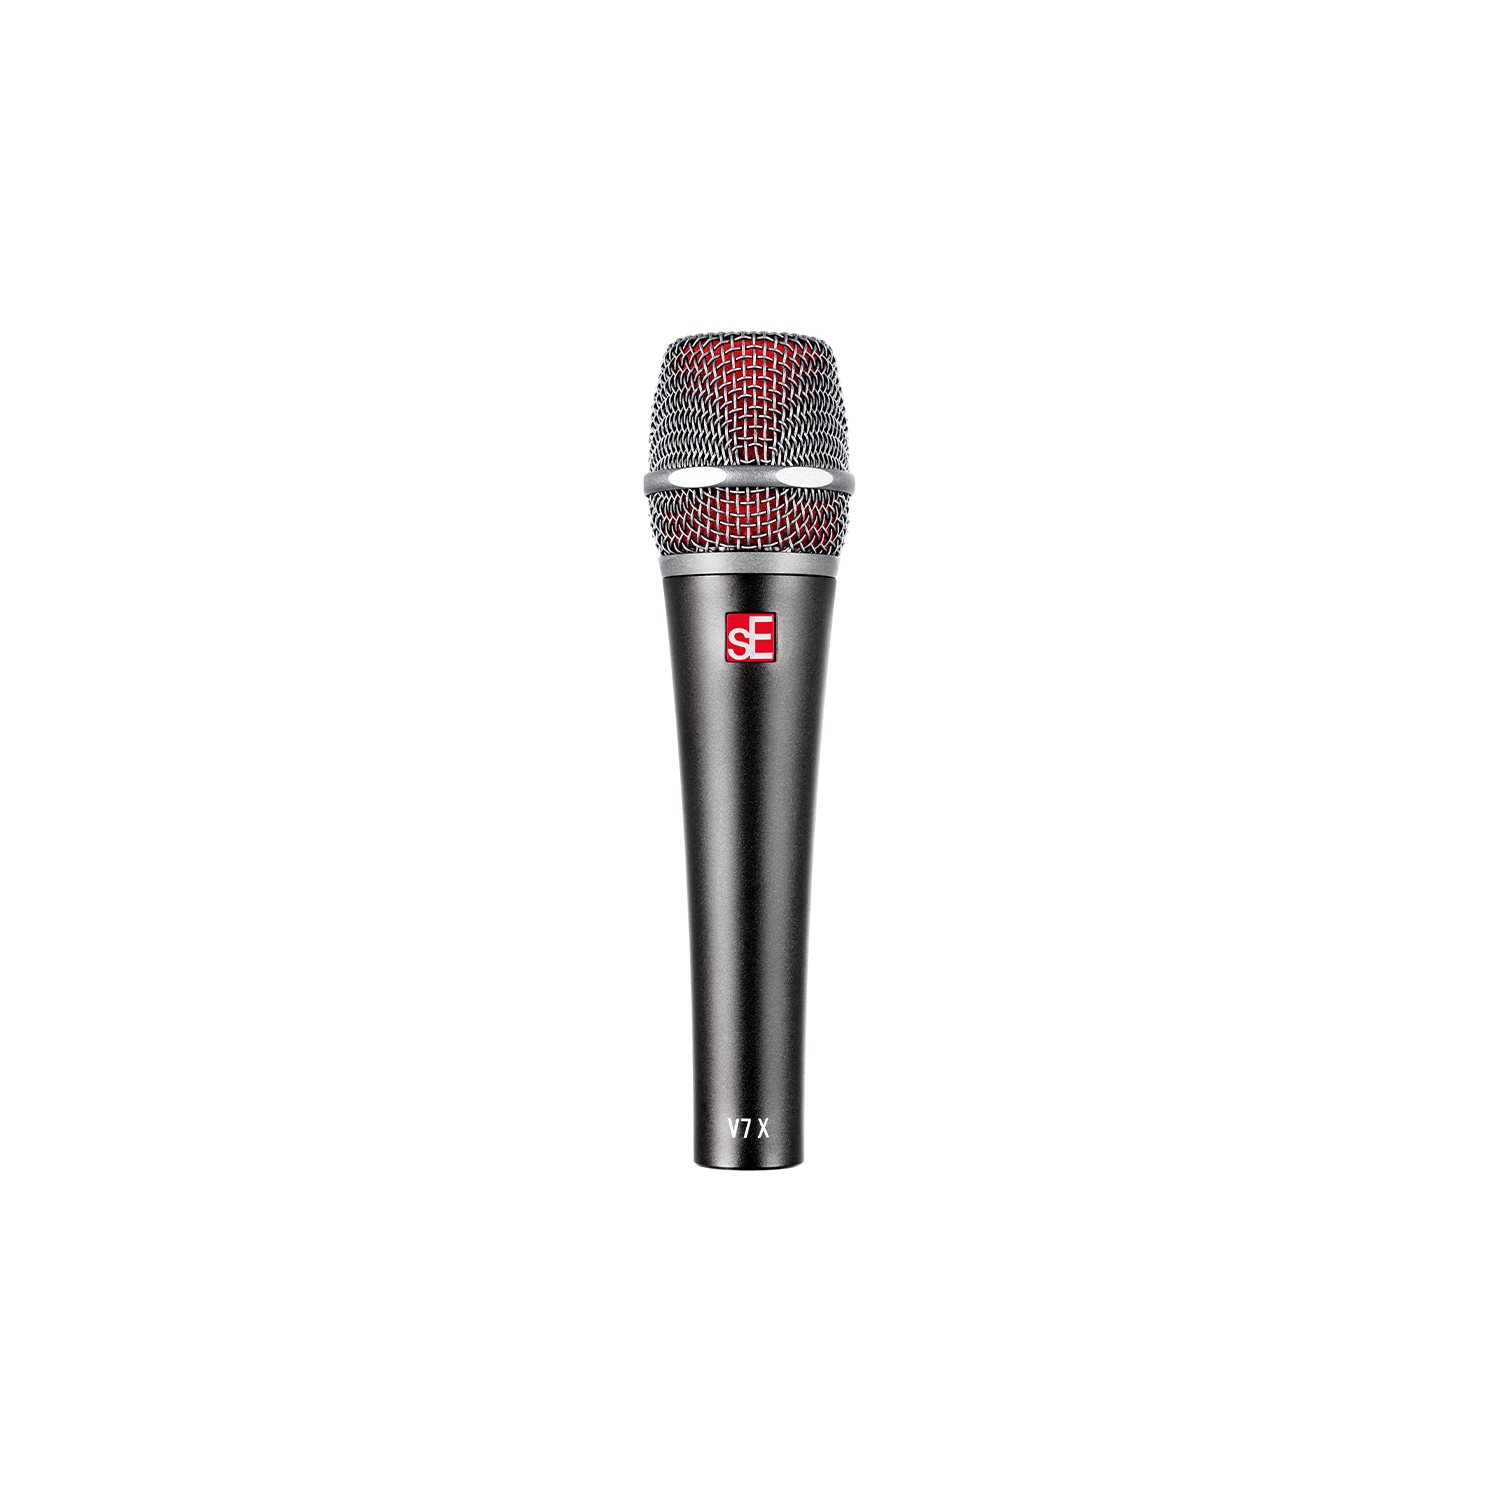 SE ELECTRONICS - se-v7x - dynamic instrumental microphone - supercardioid